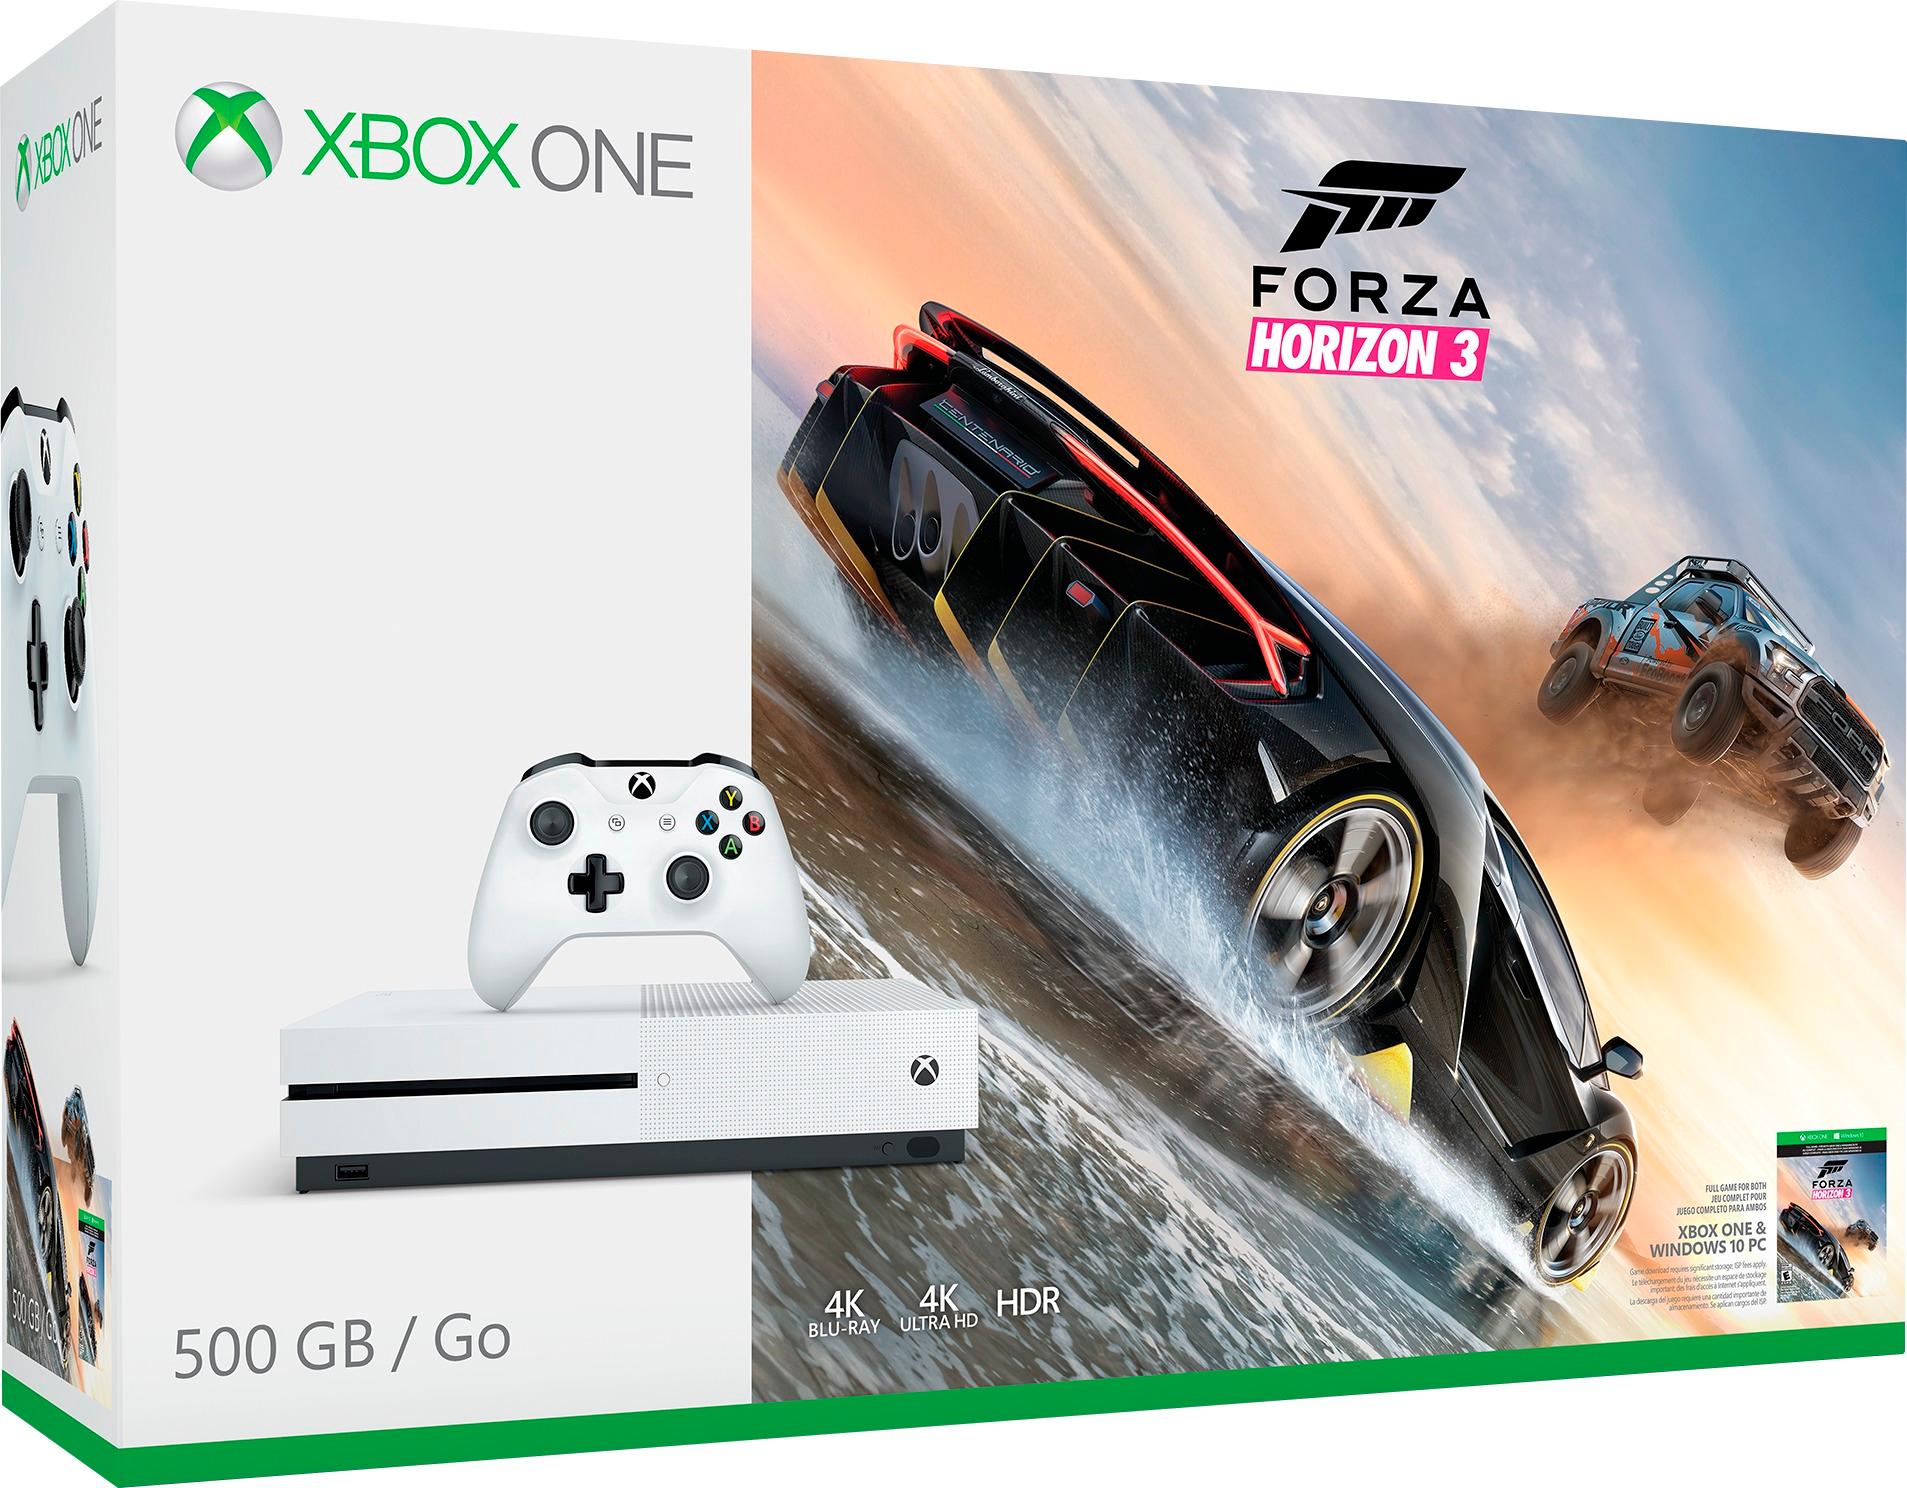 Forza Horizon 3 at the best price